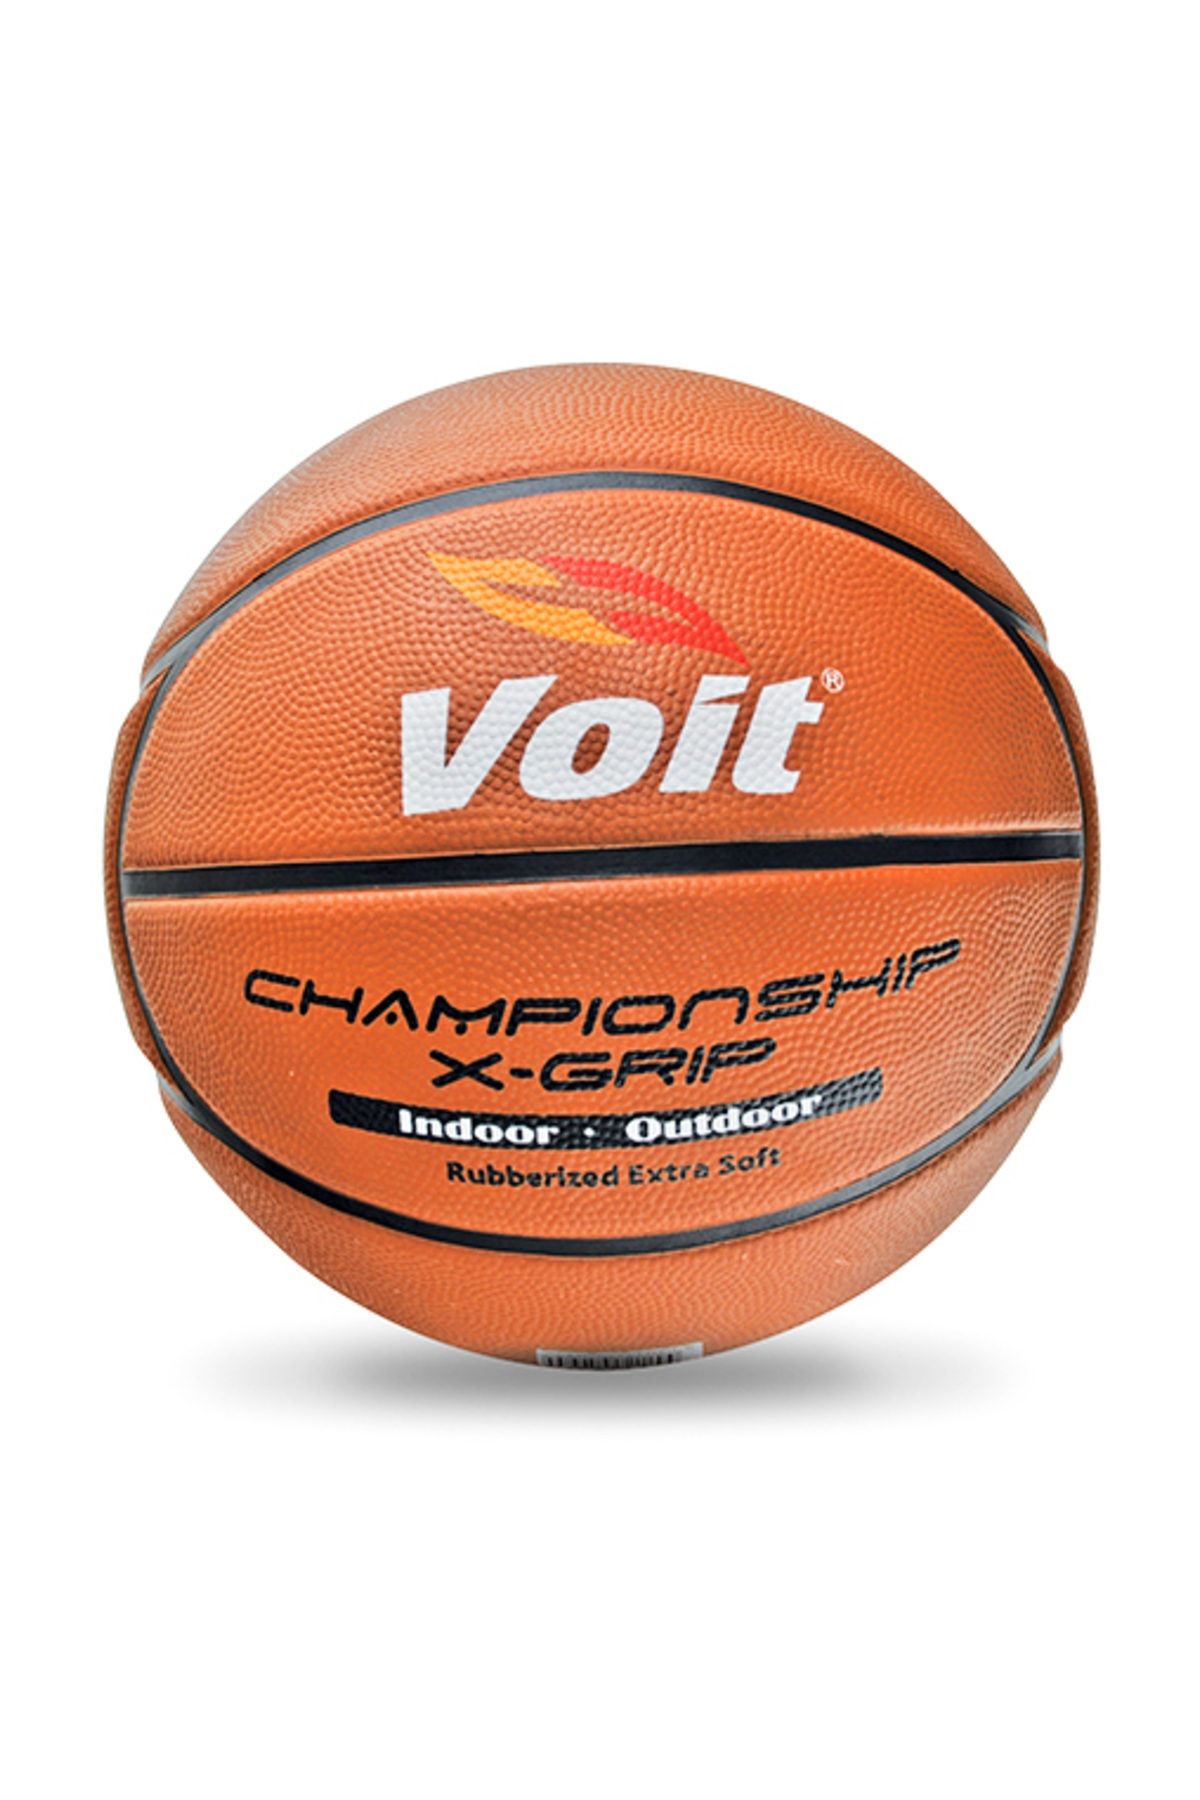 Voit Xgrıp Basketbol Topu N:7/Kahve 1VTTPXGRIPN7/020